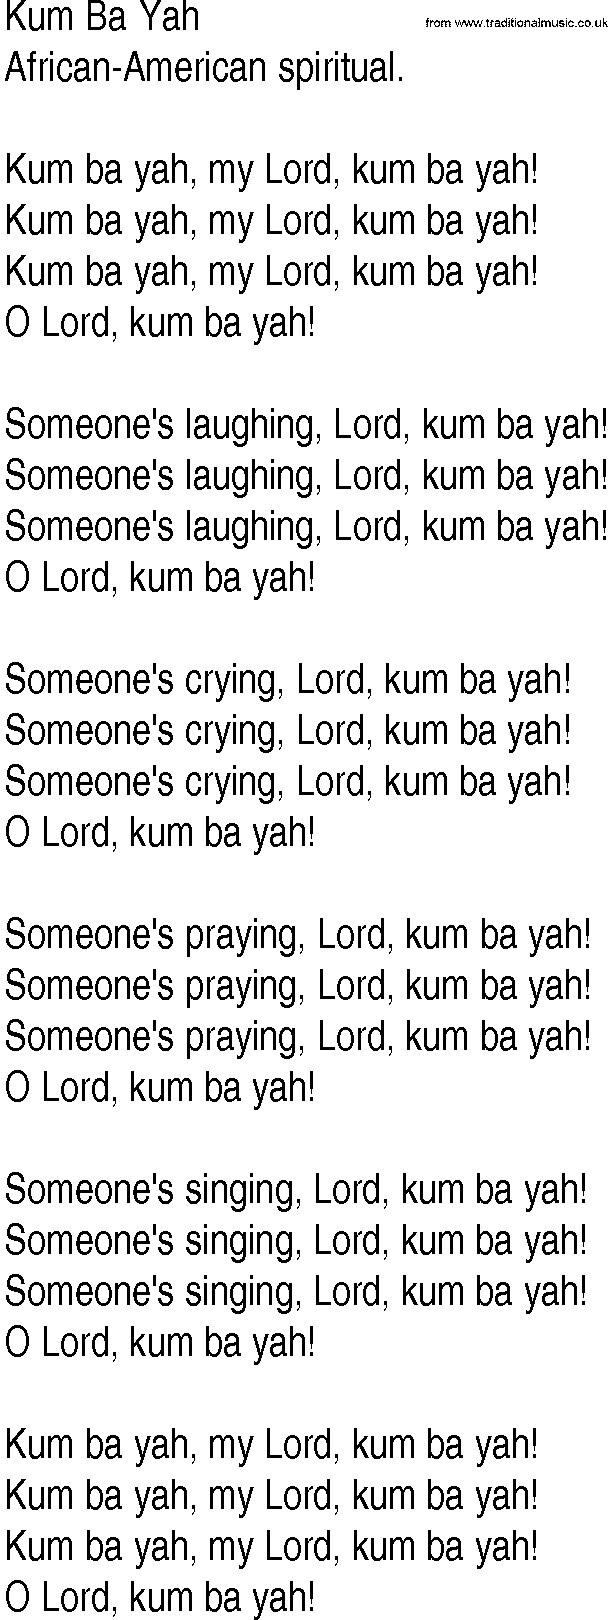 Hymn and Gospel Song: Kum Ba Yah by AfricanAmerican spiritual lyrics